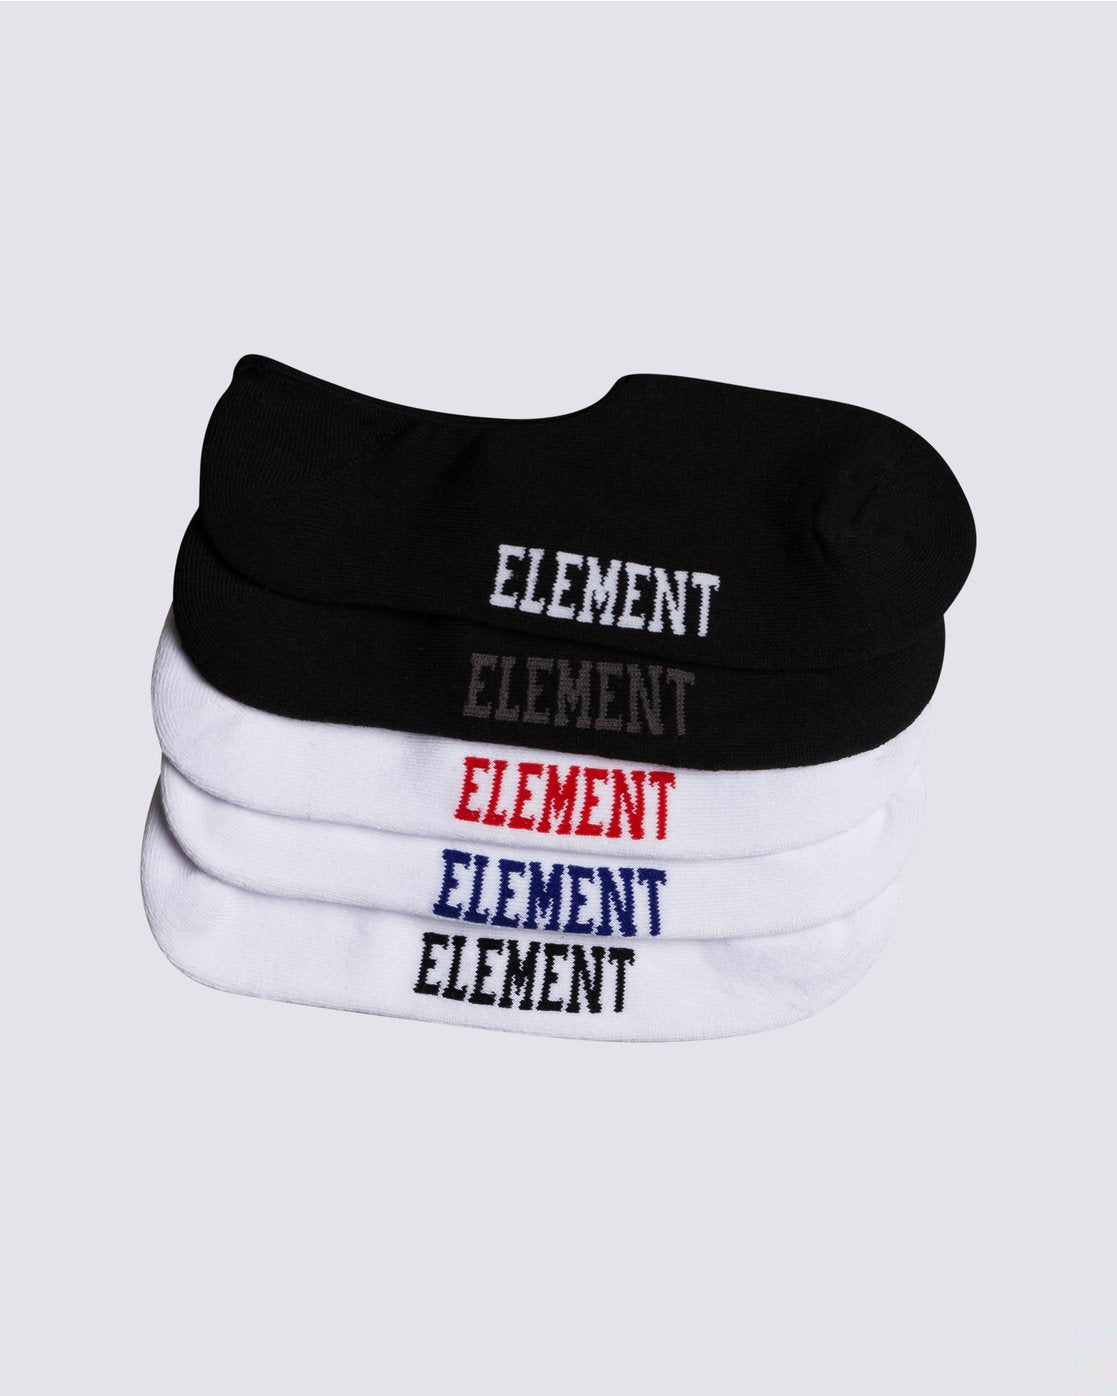 ELEMENT SOCKS - LOW RISE BLACK/WHITE